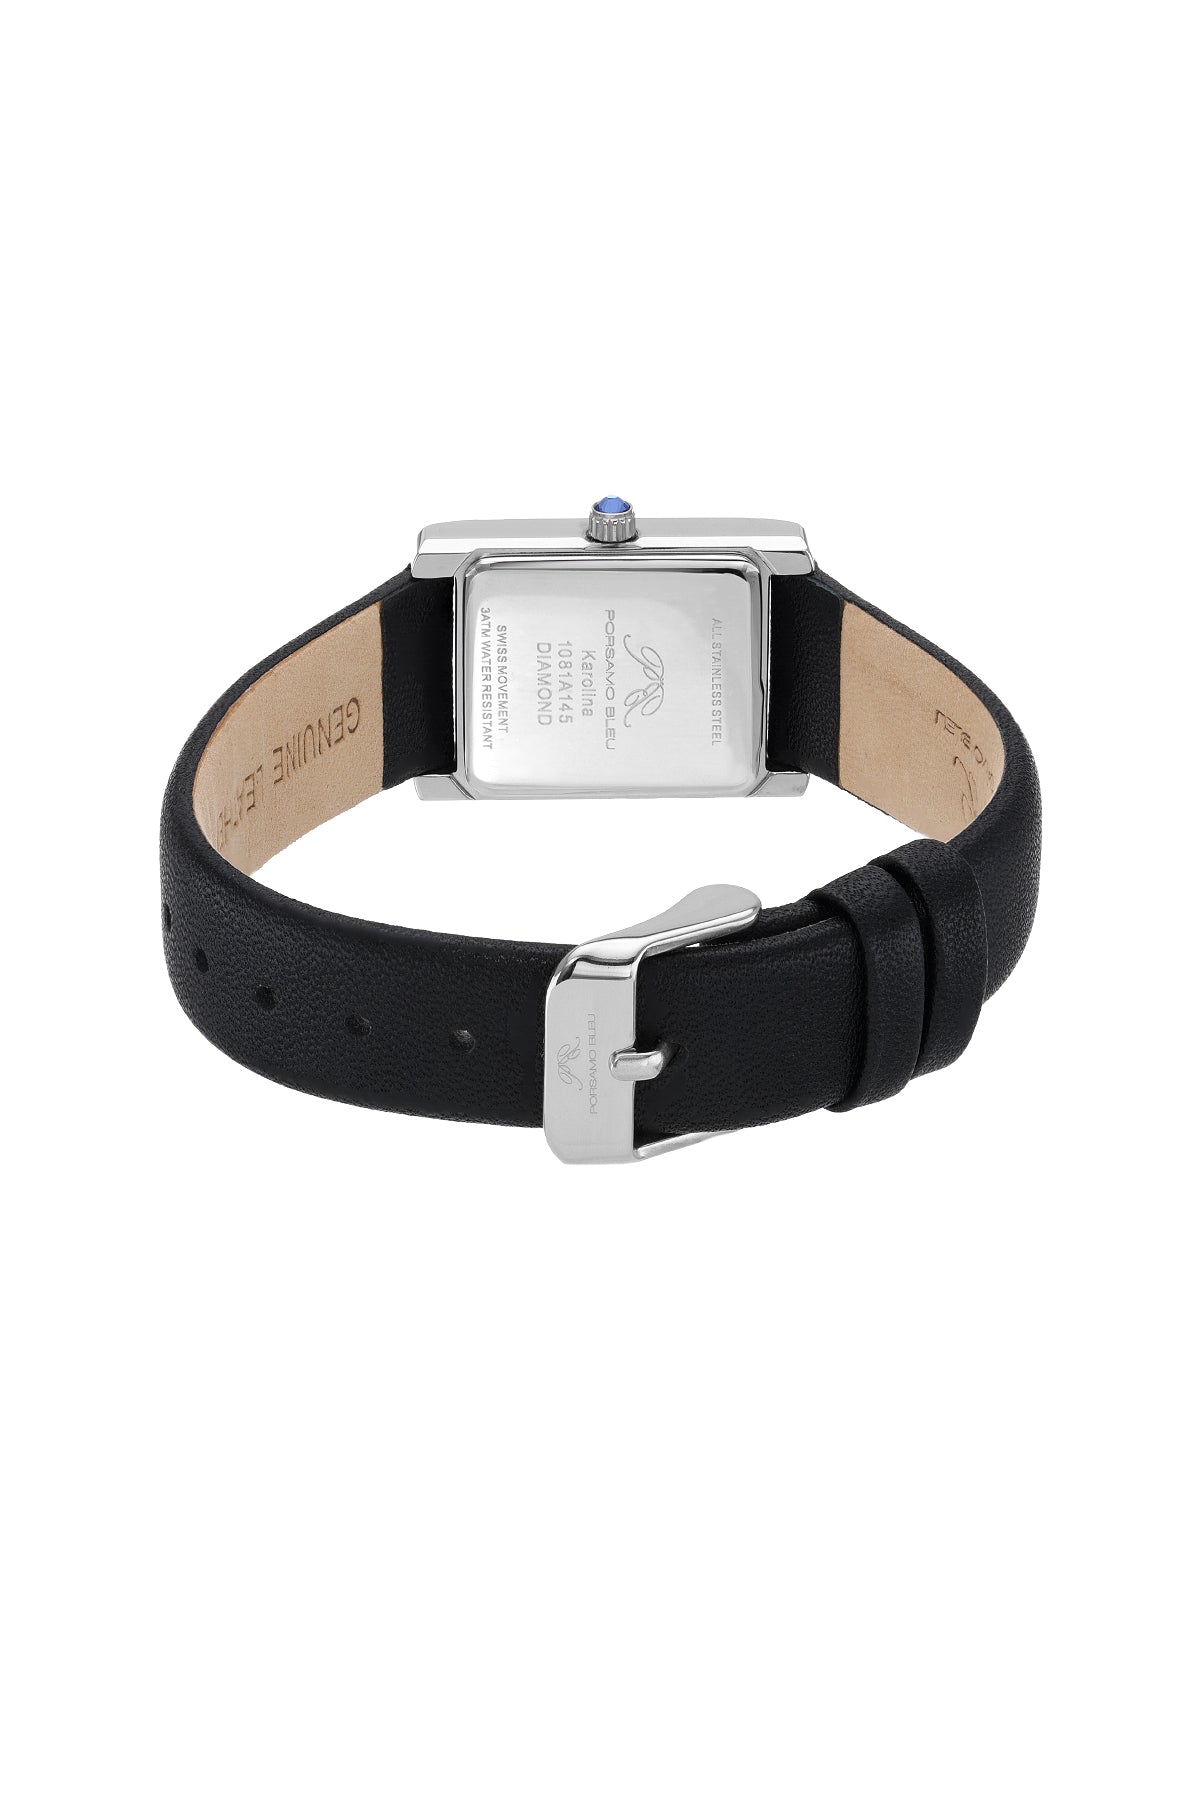 Porsamo Bleu Karolina Luxury Diamond Rectangular Women's Genuine Leather Band Watch, Silver, Black 1081AKAL